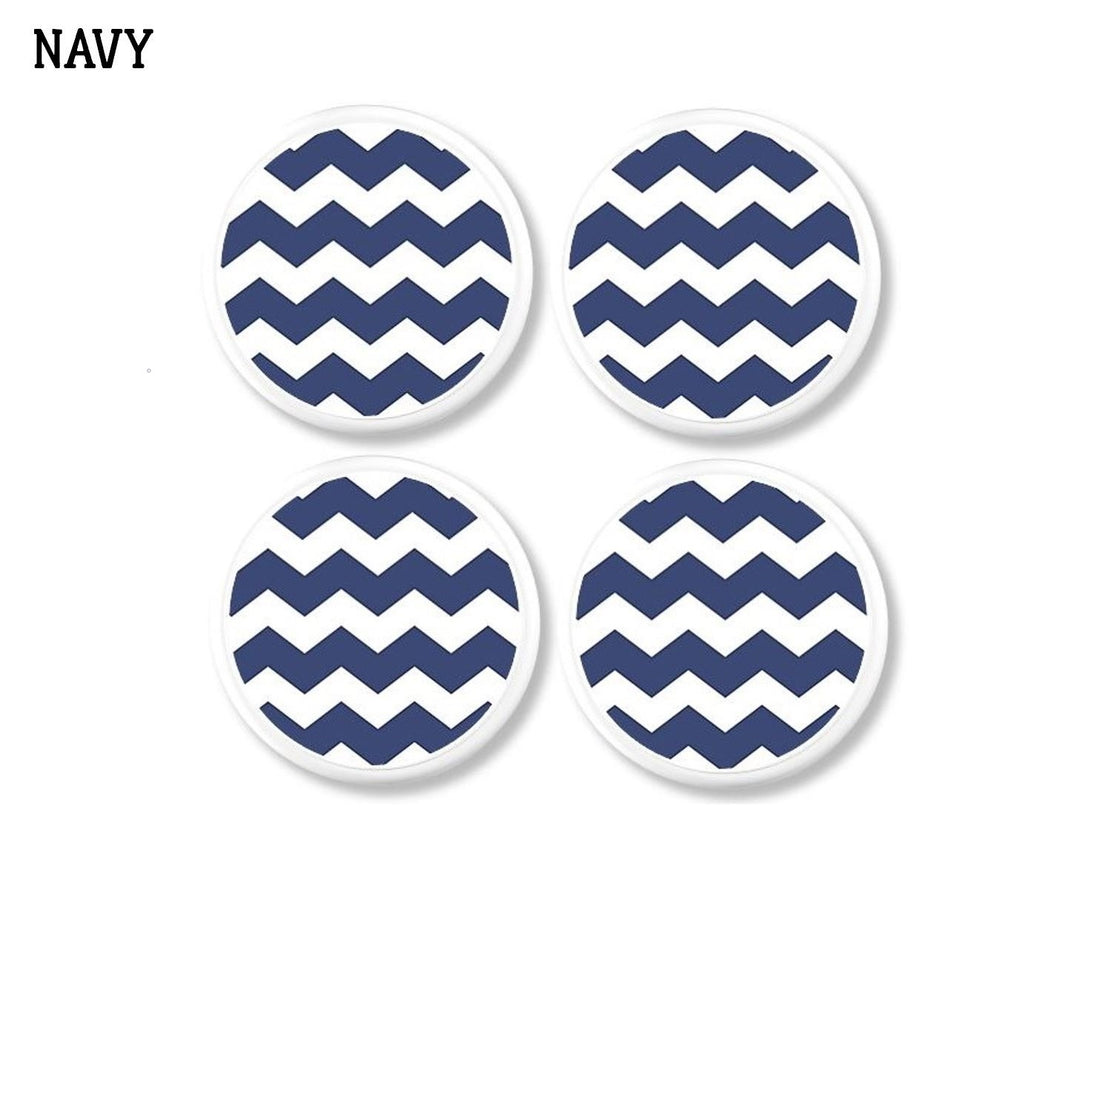 4 Navy blue and white chevron stripe knobs. Drawer pulls for nautical or coastal cottage decor.